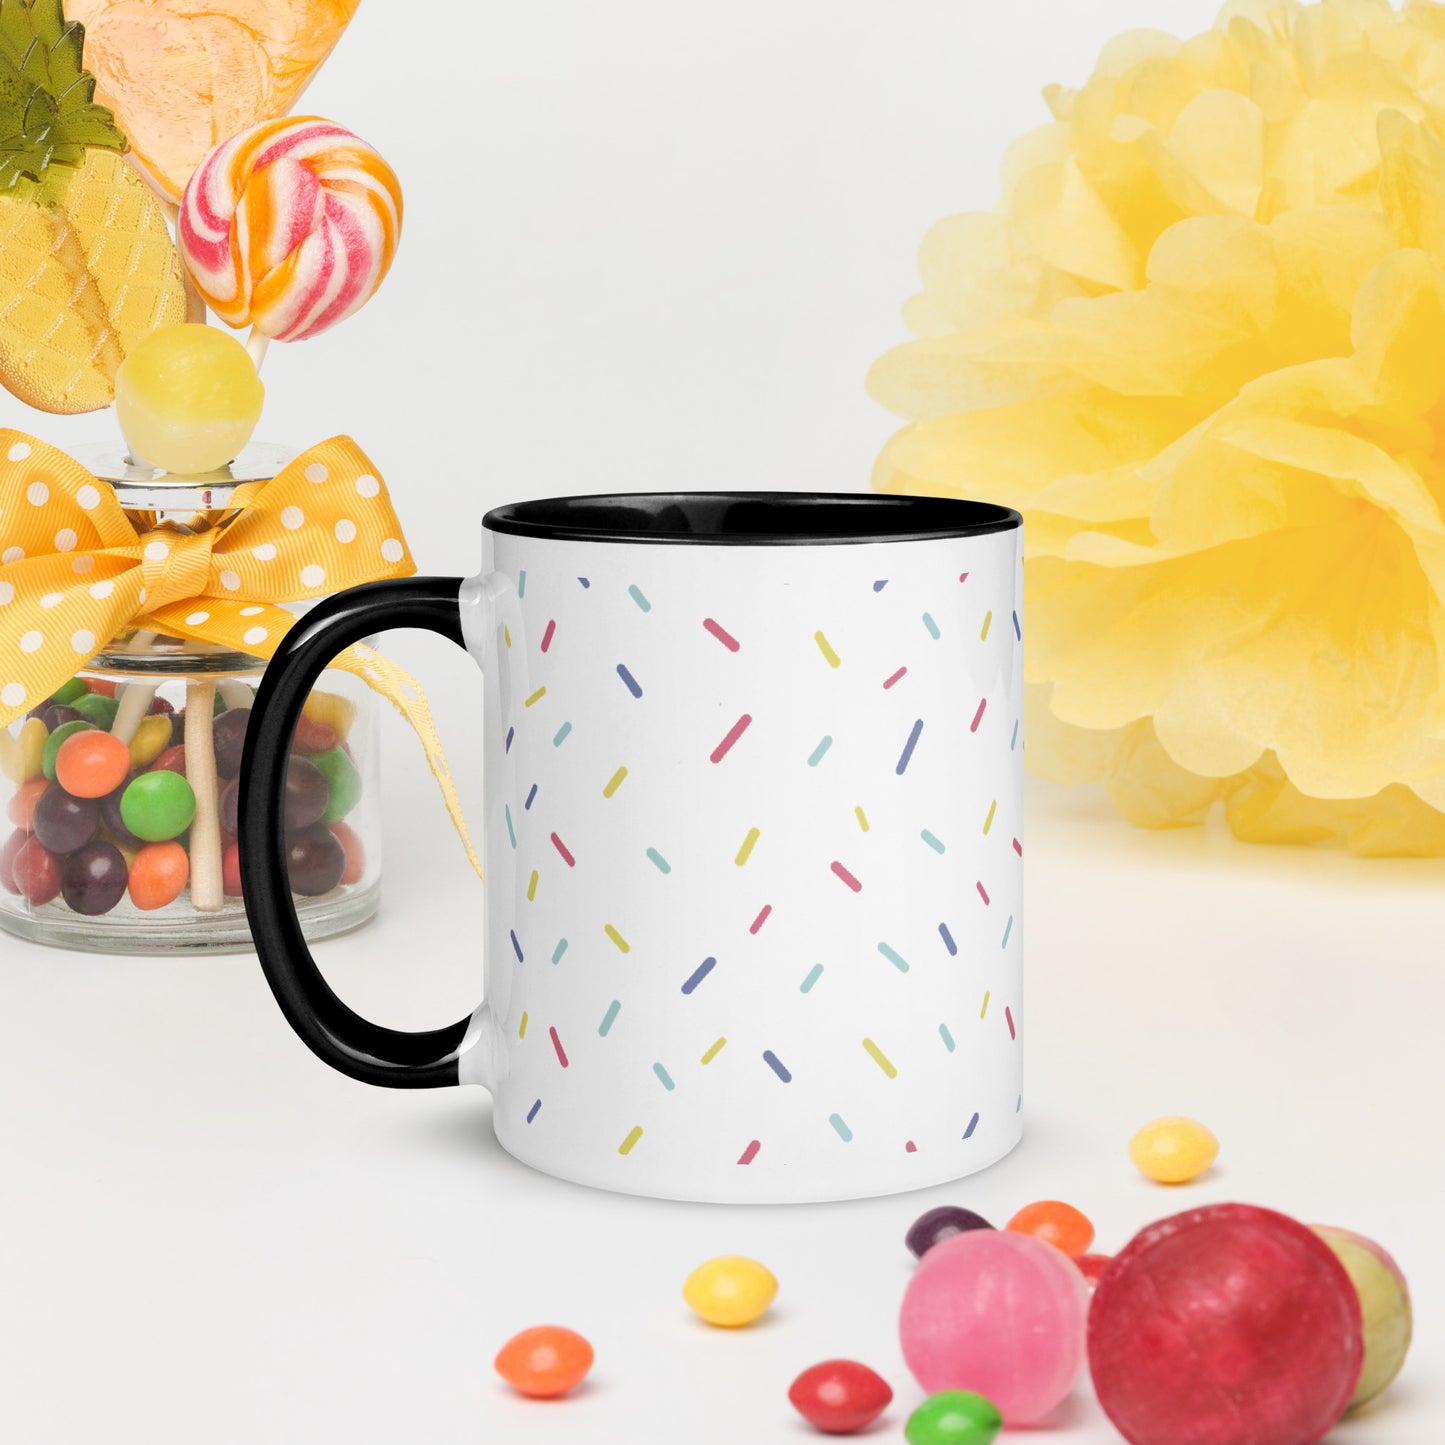 Sprinkles - Ceramic Mug with Color Inside